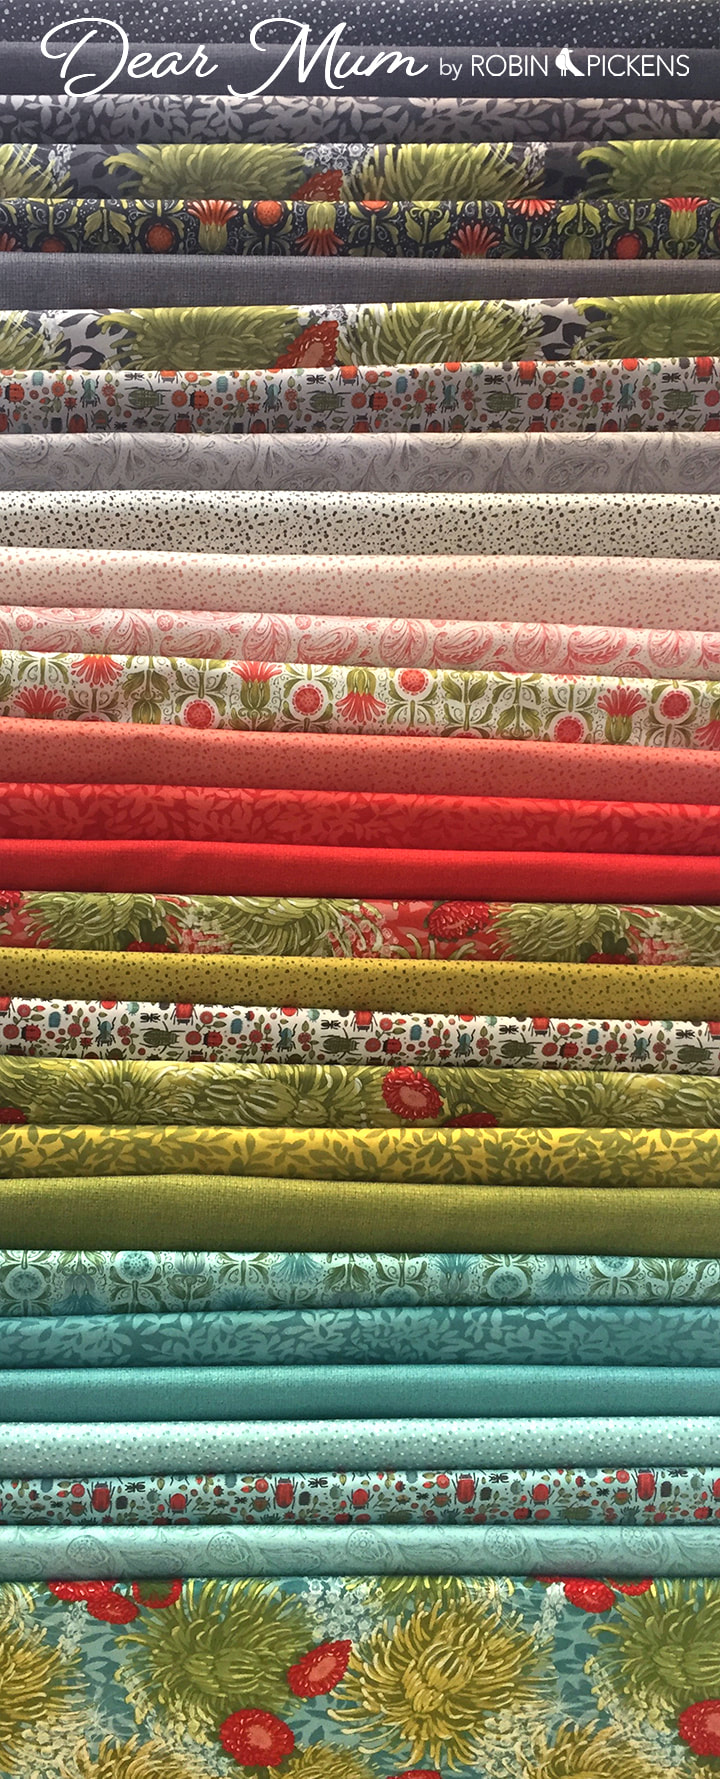 Dear Mum by Robin Pickens for Moda fabrics. Full color range.